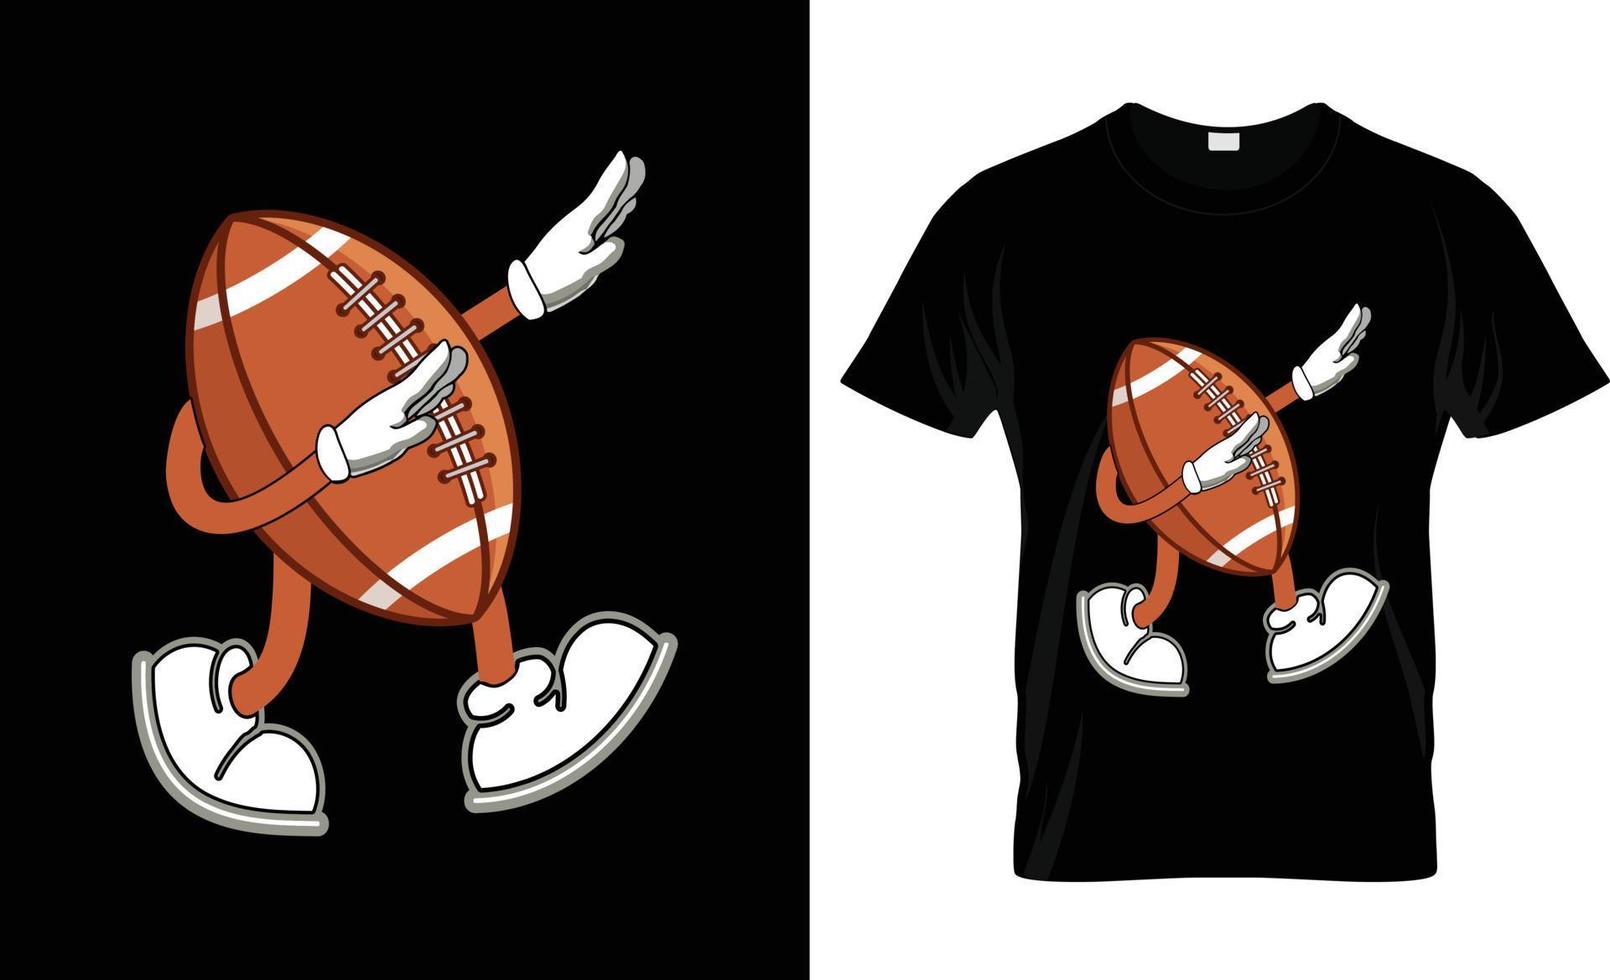 american football t-shirt design, american football t-shirt slogan and apparel design,american football typography,american football vector,american football illustration vector